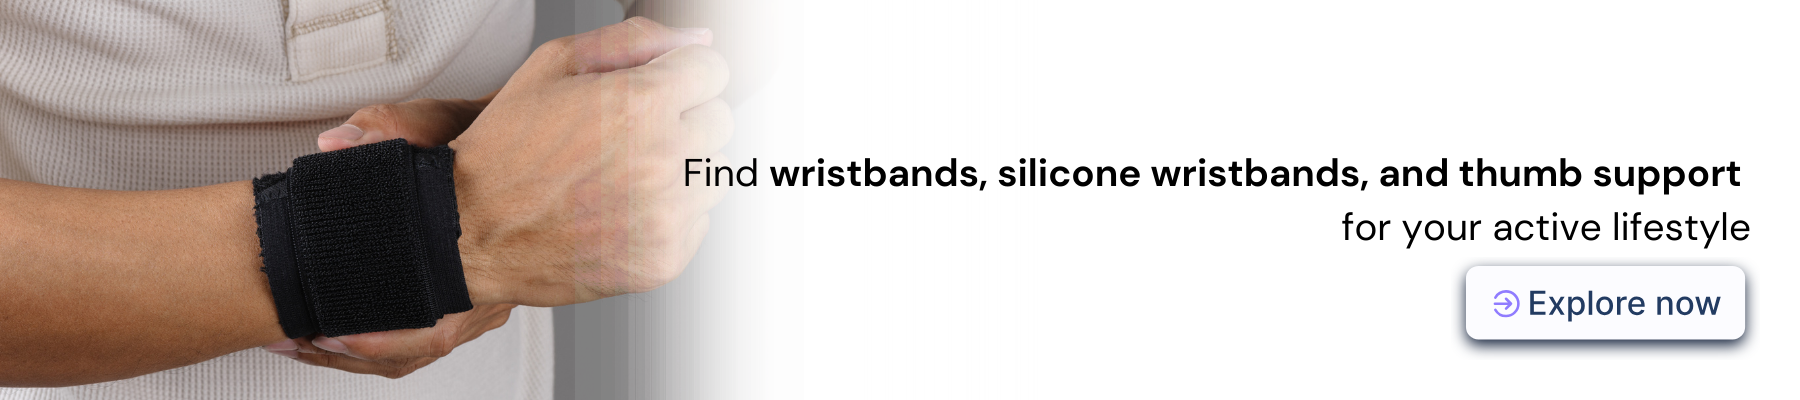 buy wrist support online in Australia